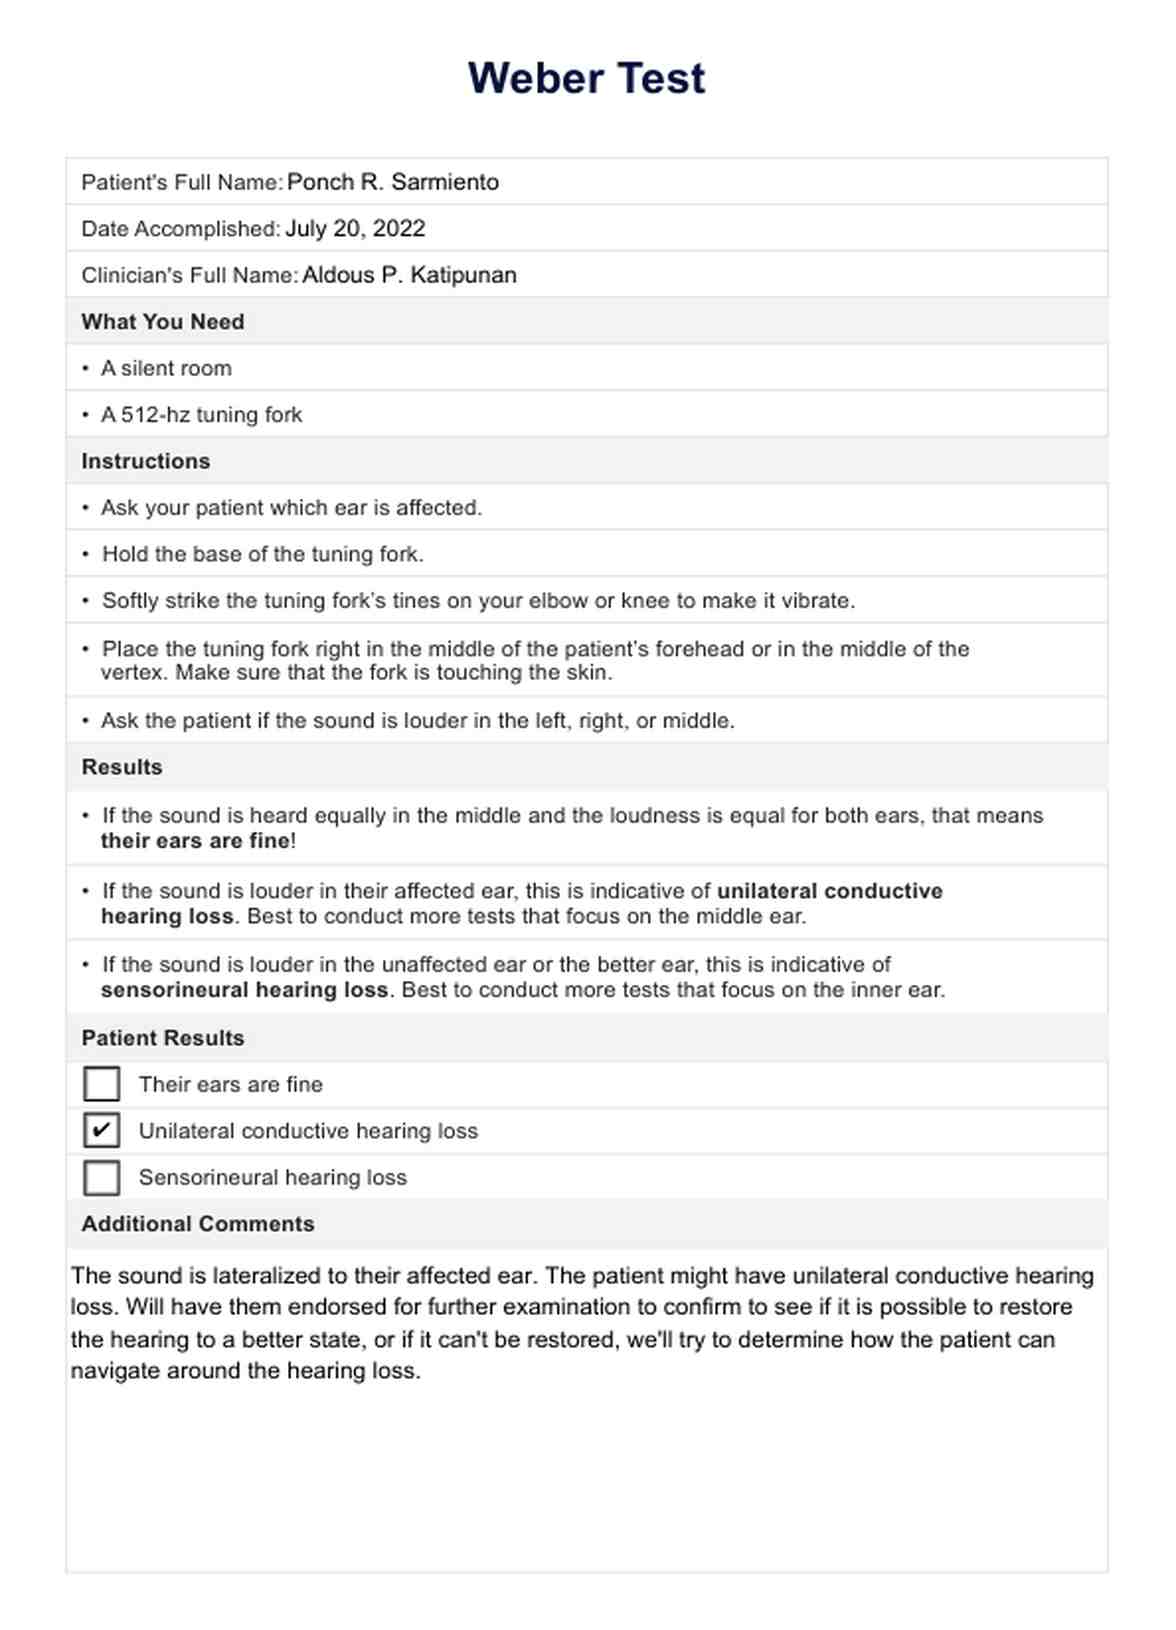 Weber Test PDF Example